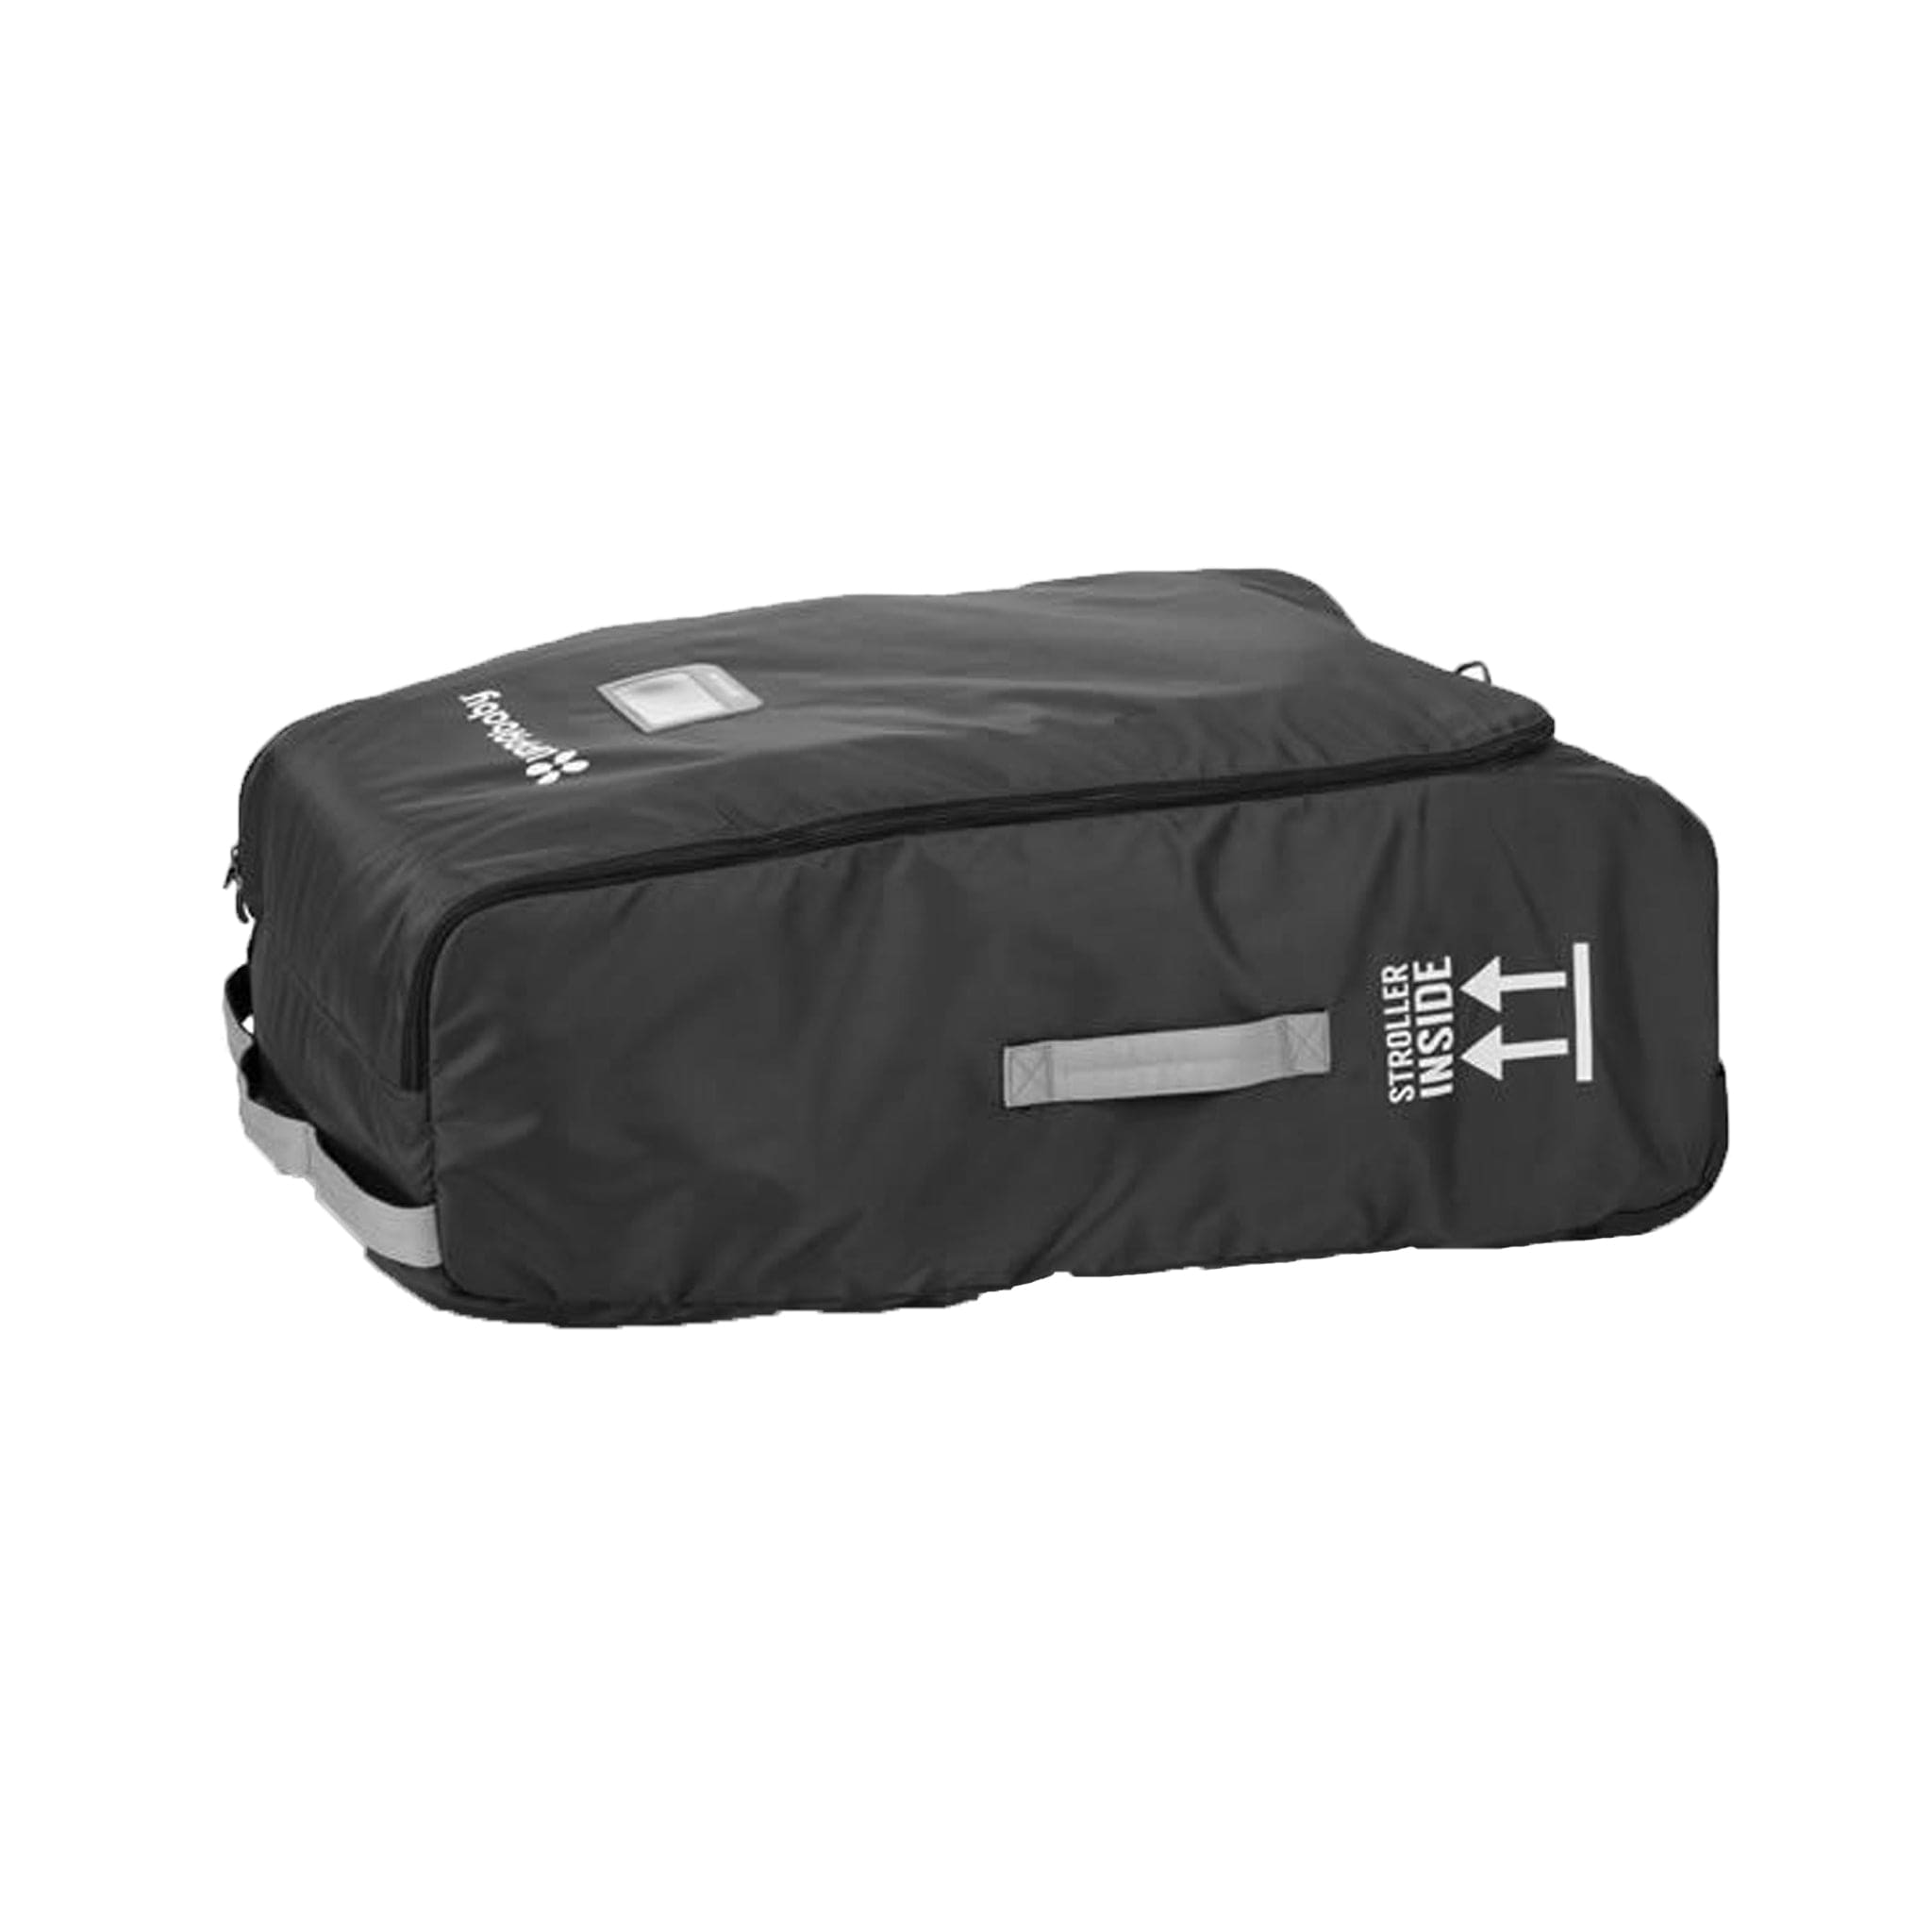 Uppababy buggy travel bags Uppababy Vista/Cruz V2 Universal Travel Bag 0920-stb-ww